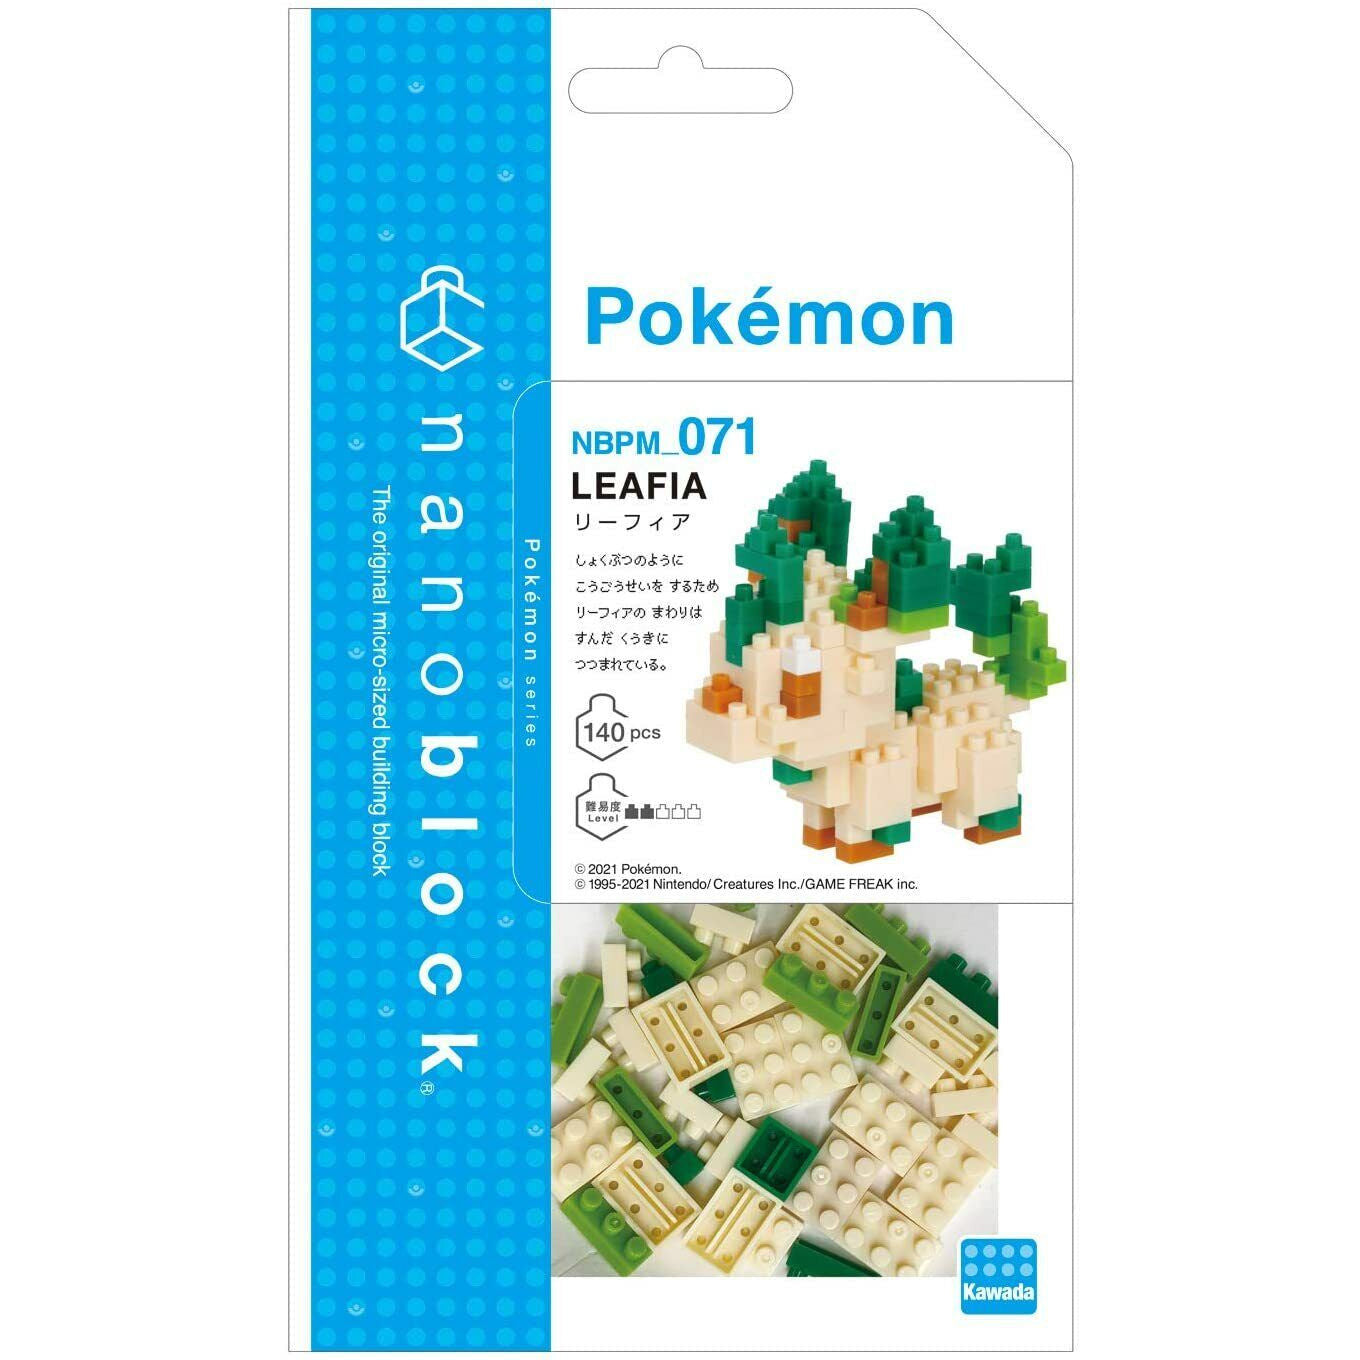 Nanoblock Pokemon Series Leafeon "Pokemon"